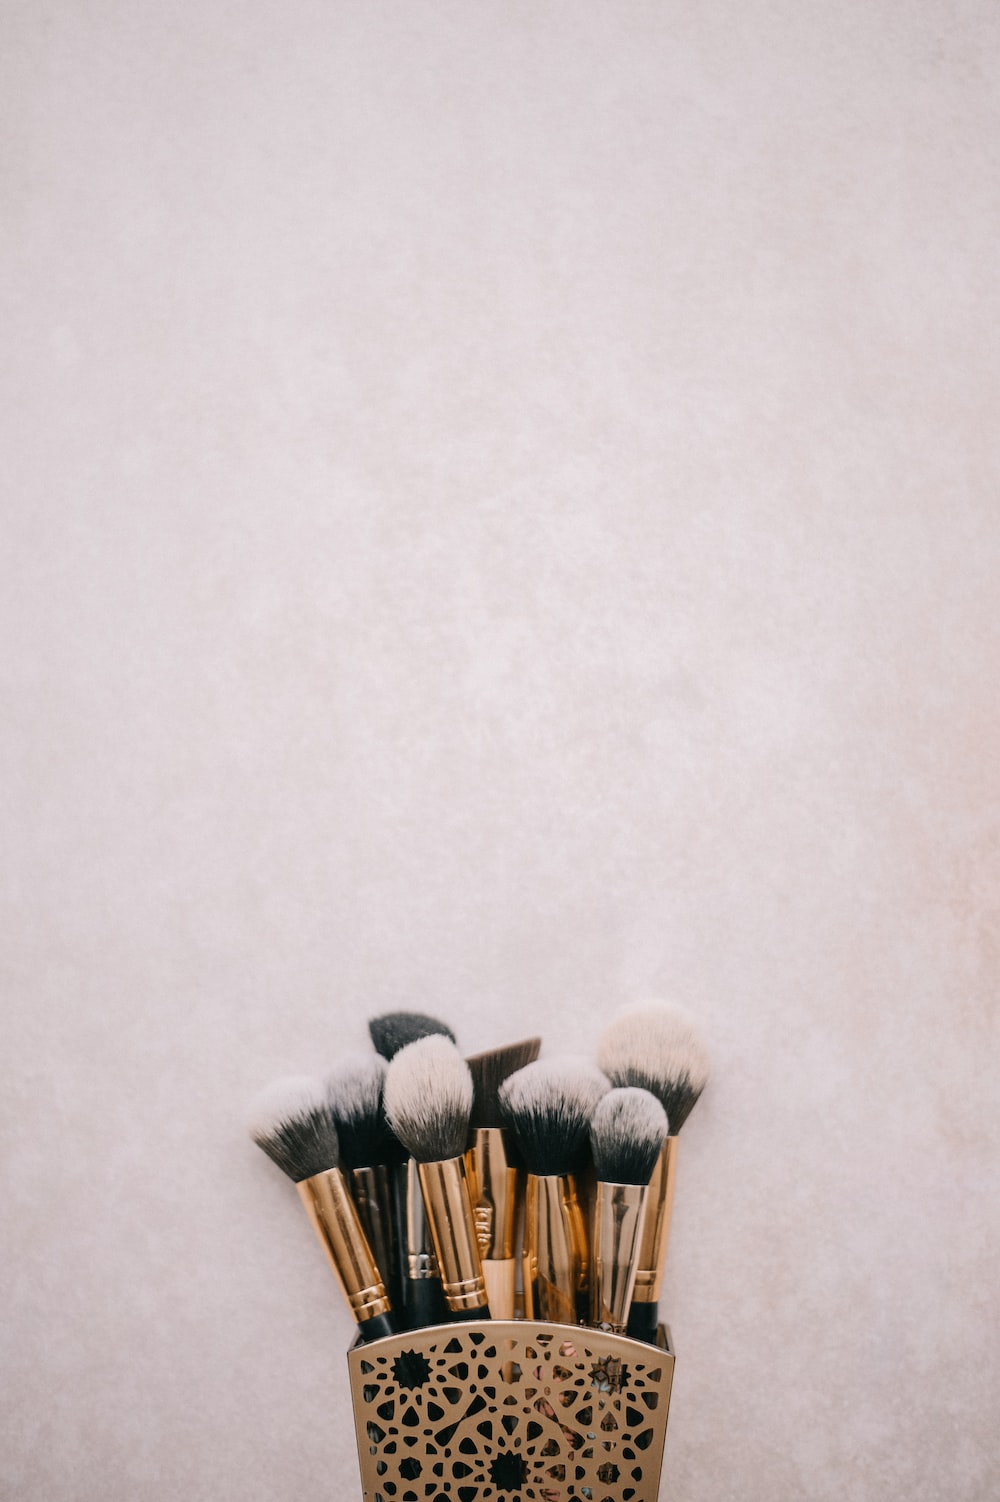 Makeup Brush Picture. Download Free Image